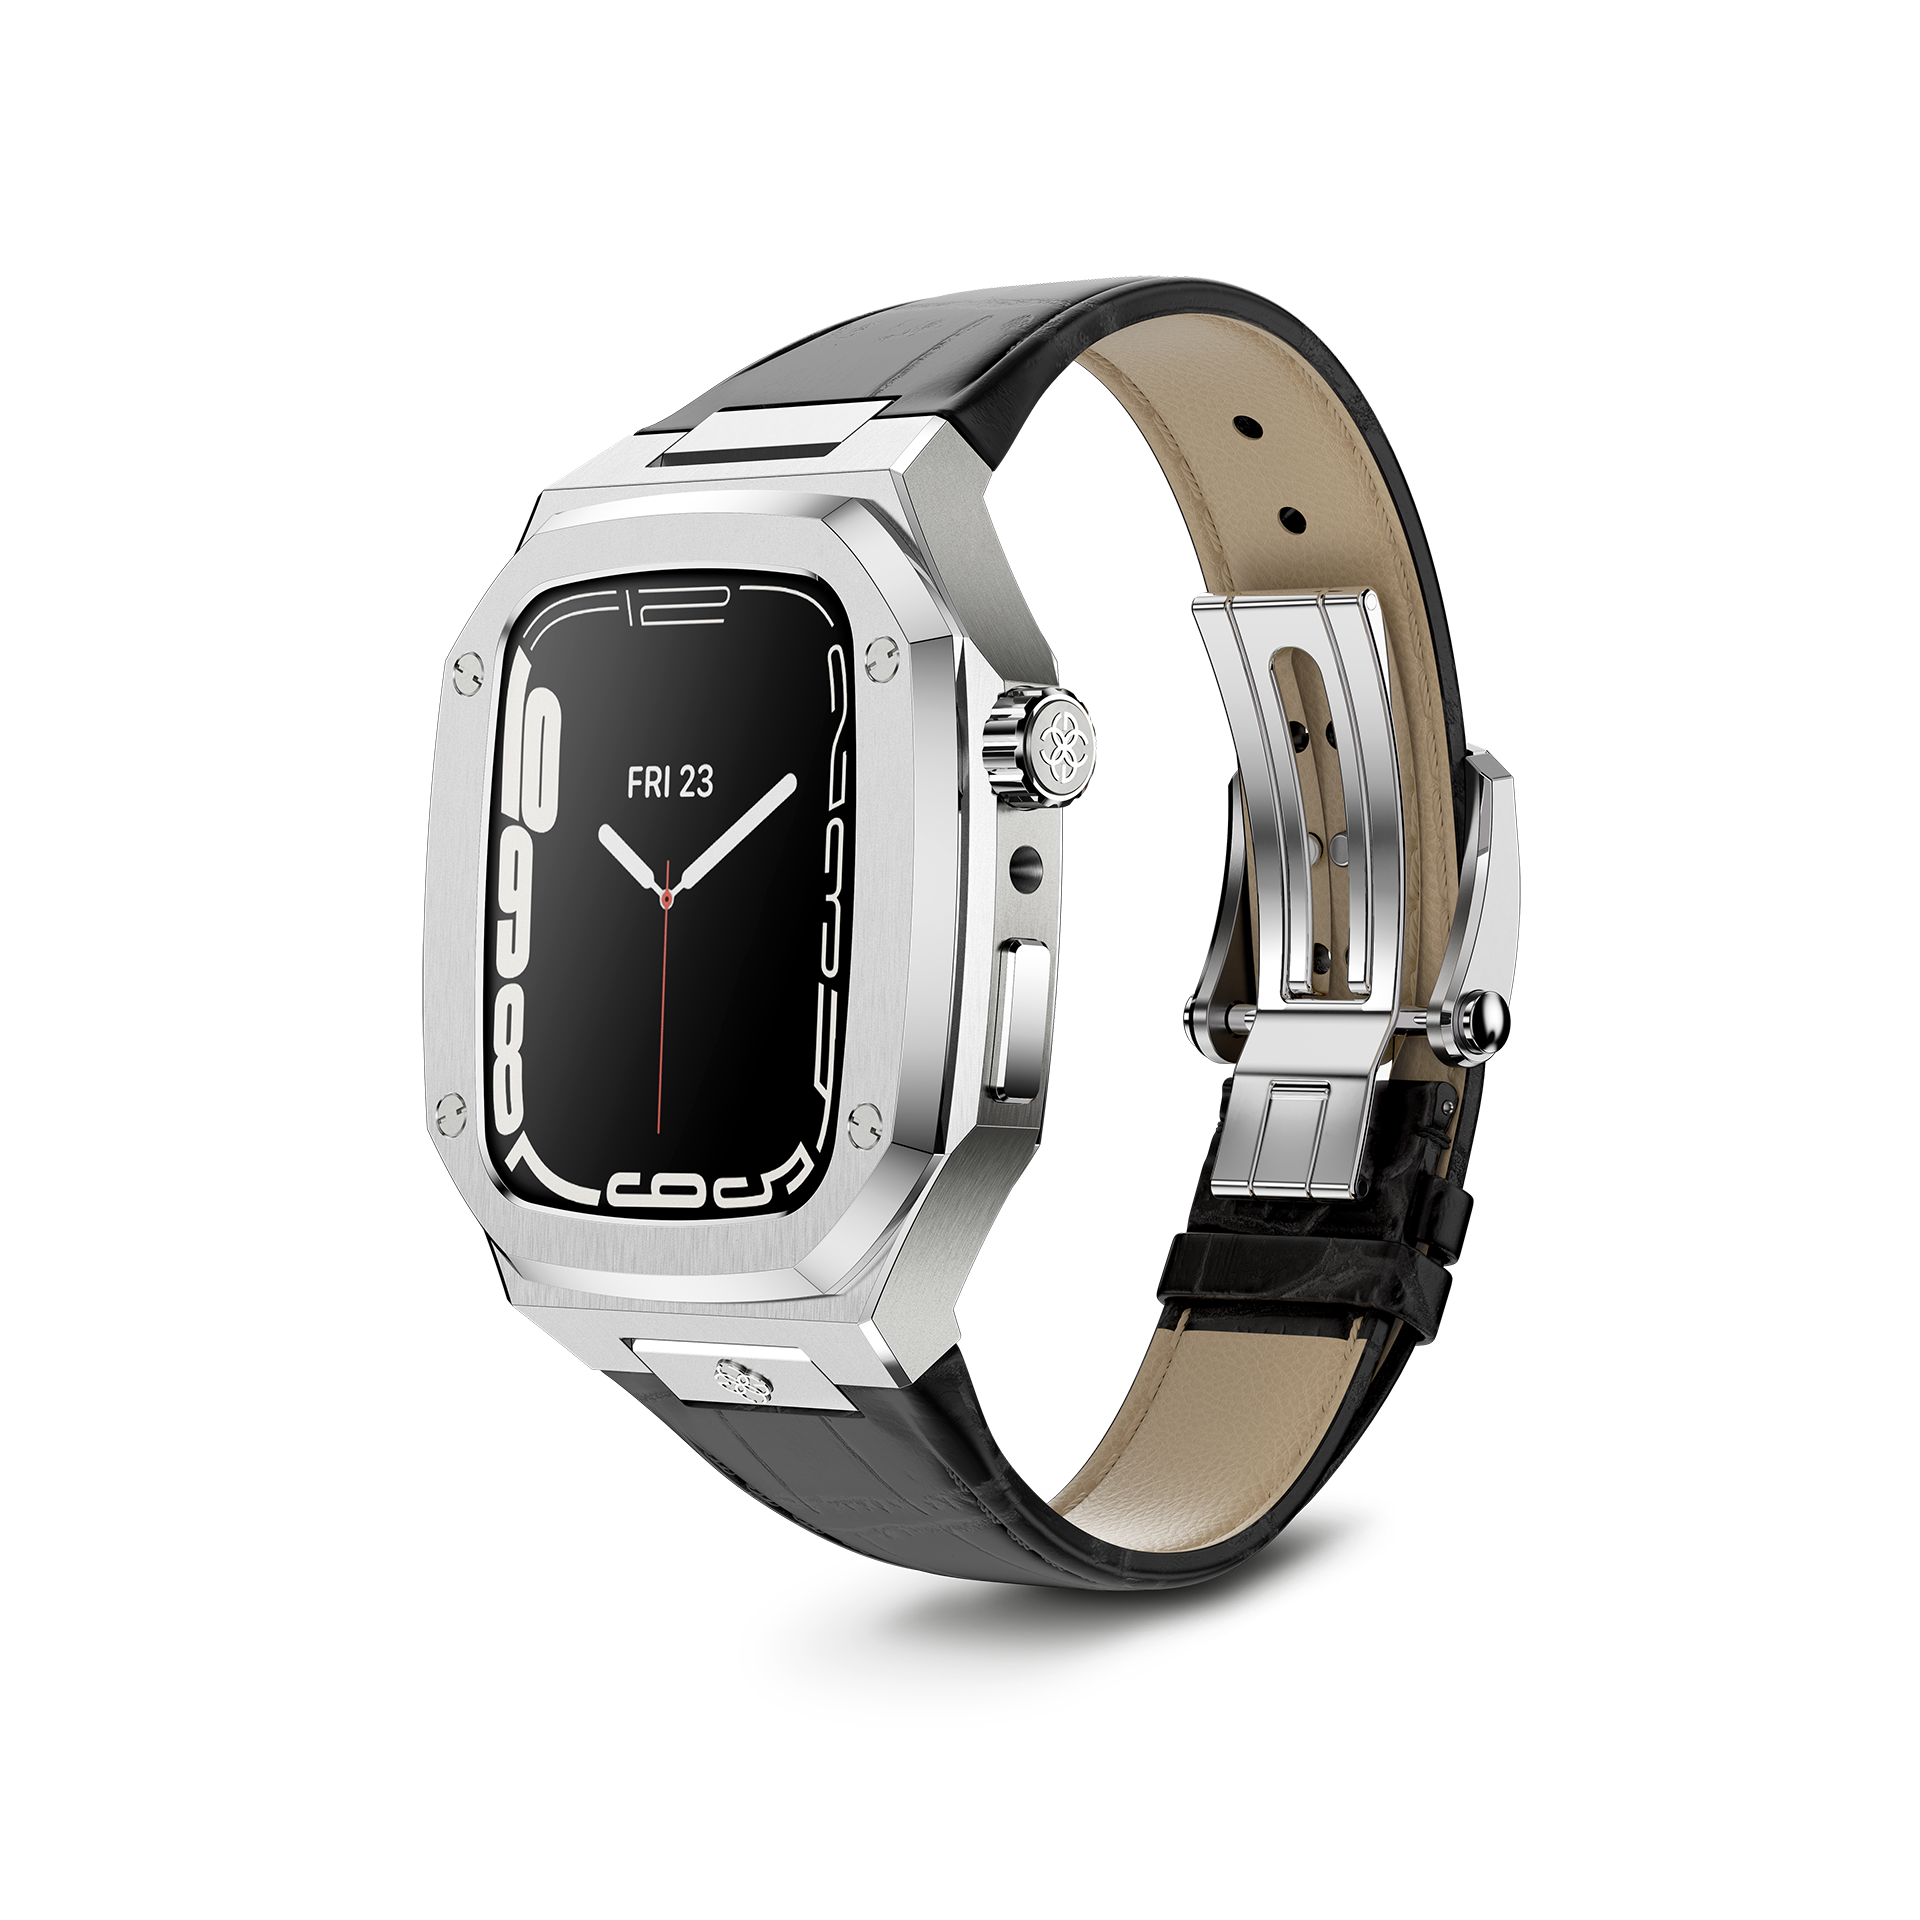 Apple Watch Case - CL45 - ROSE GOLD – ゴールデンコンセプト公式サイト